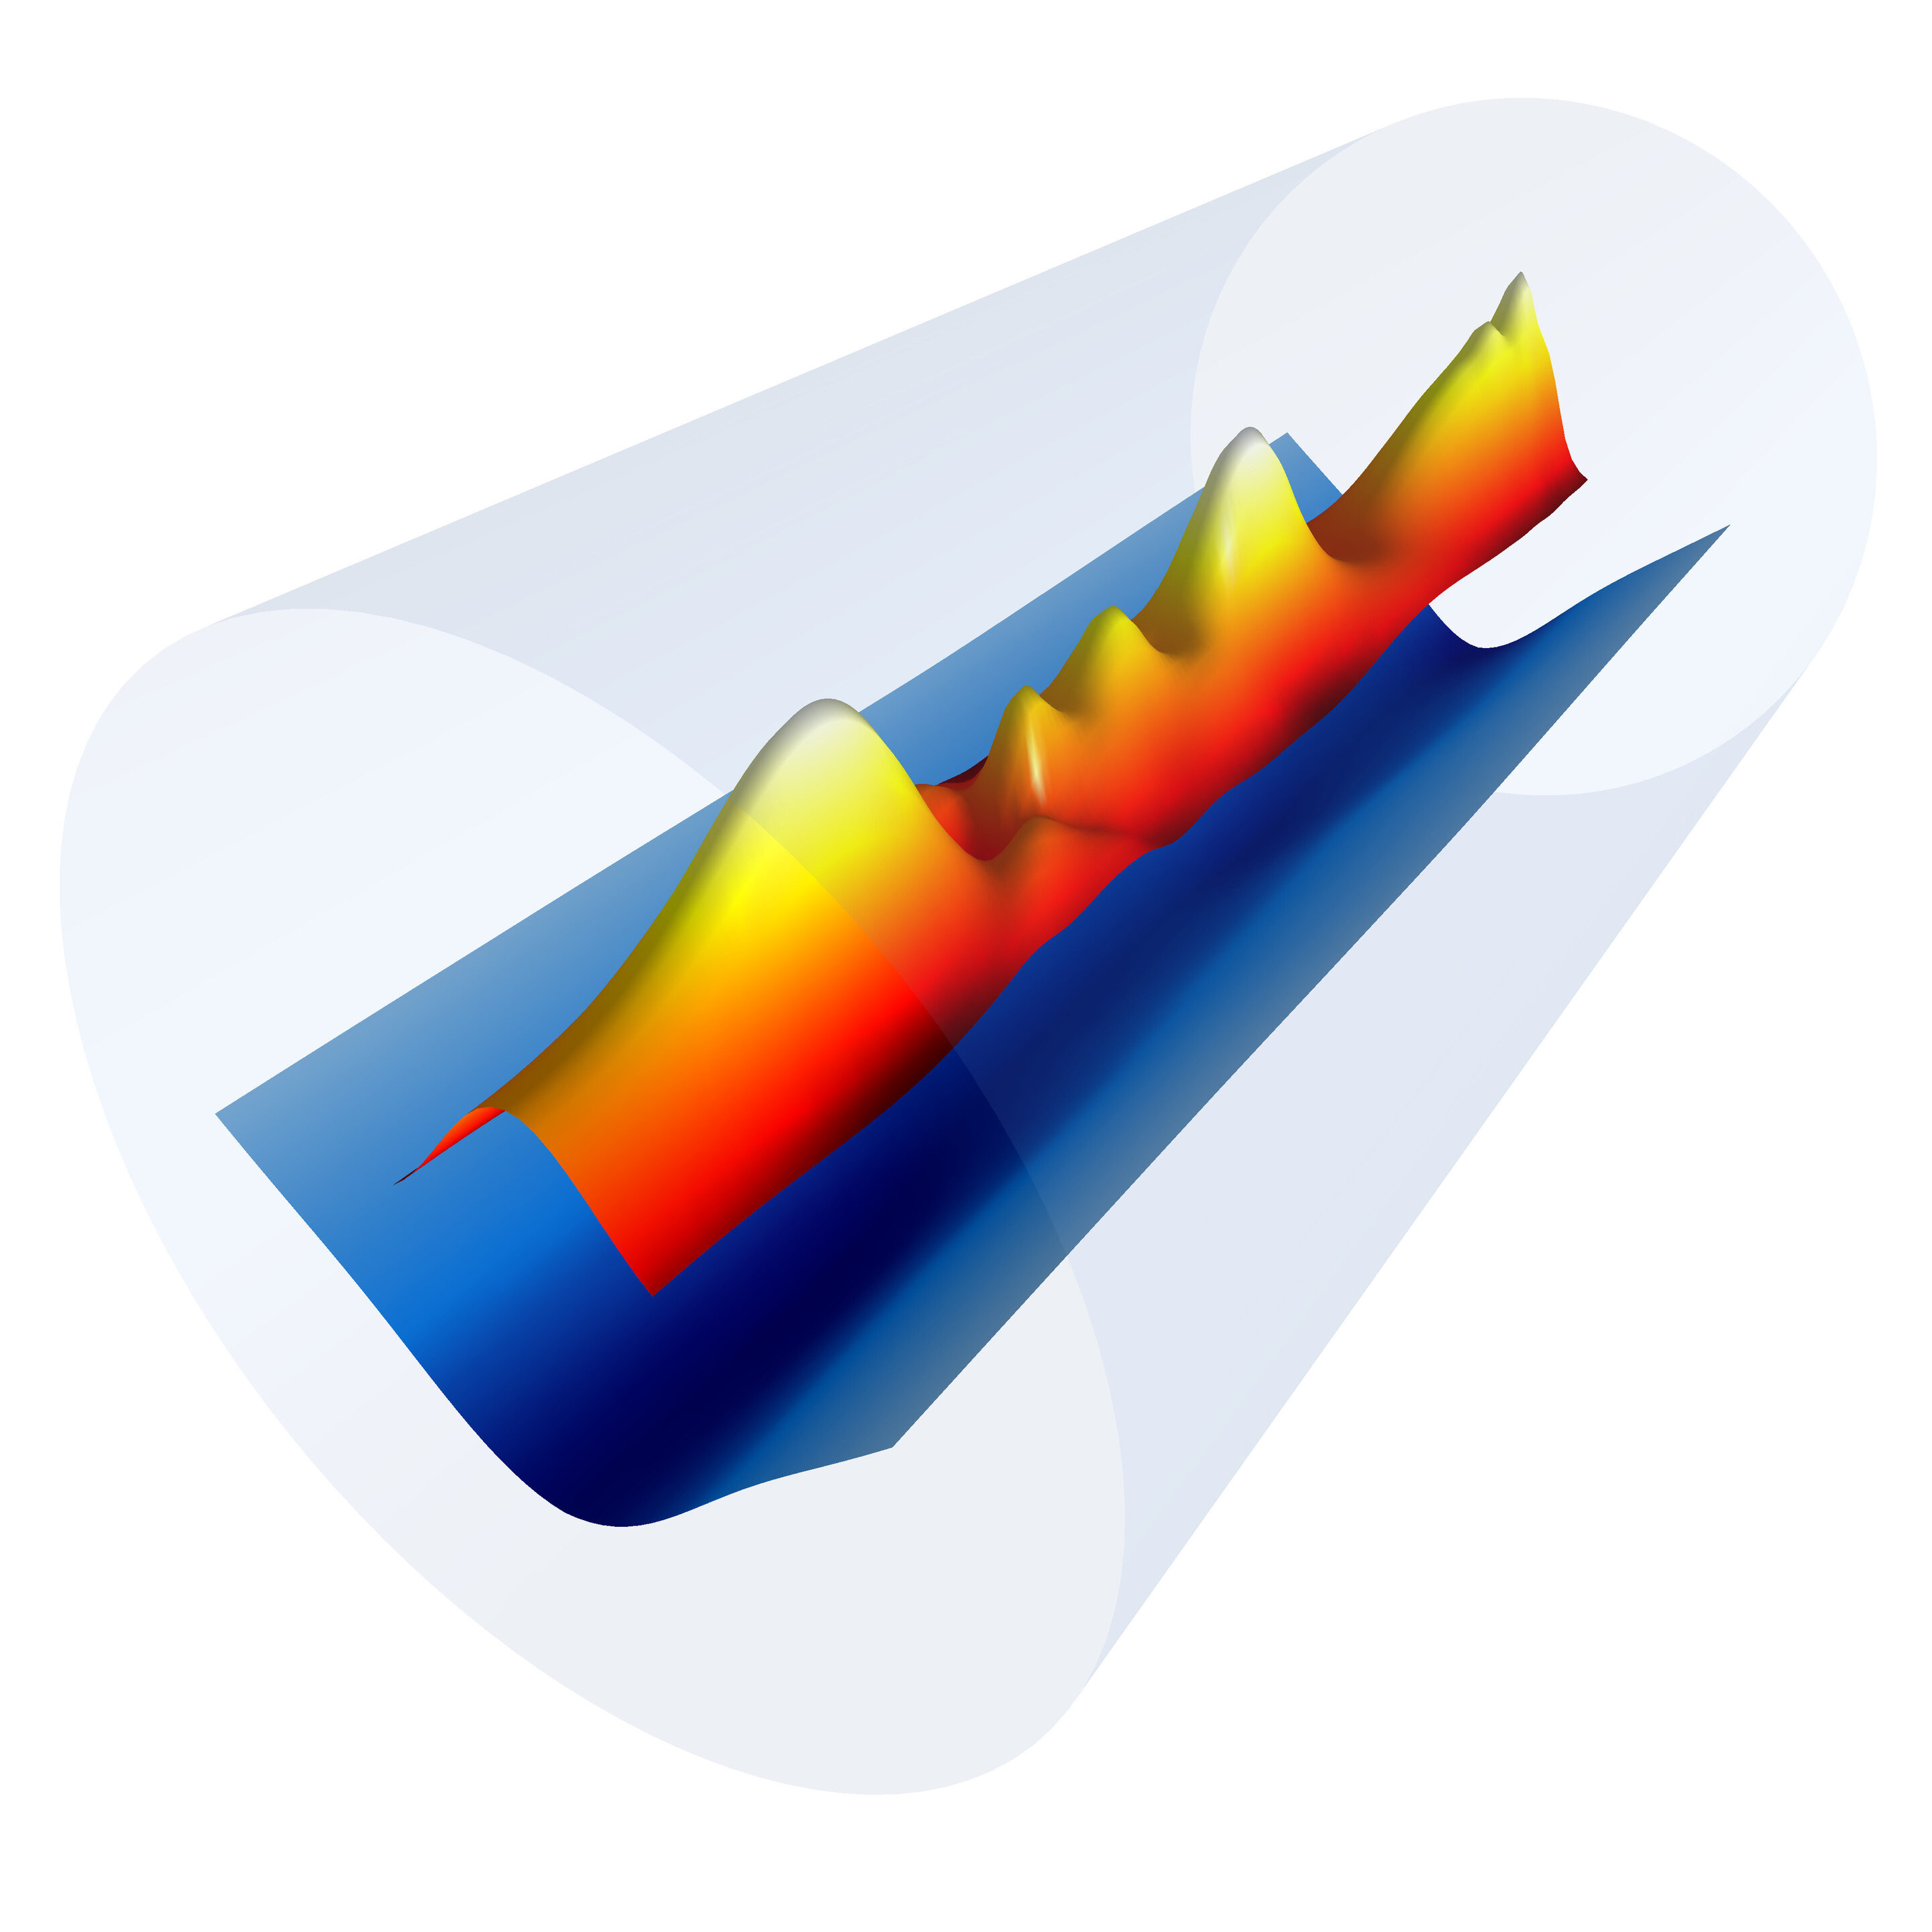 Kỉ lục mới về gia tốc electron: Từ zero lên 7,8 GeV trên 8 inch